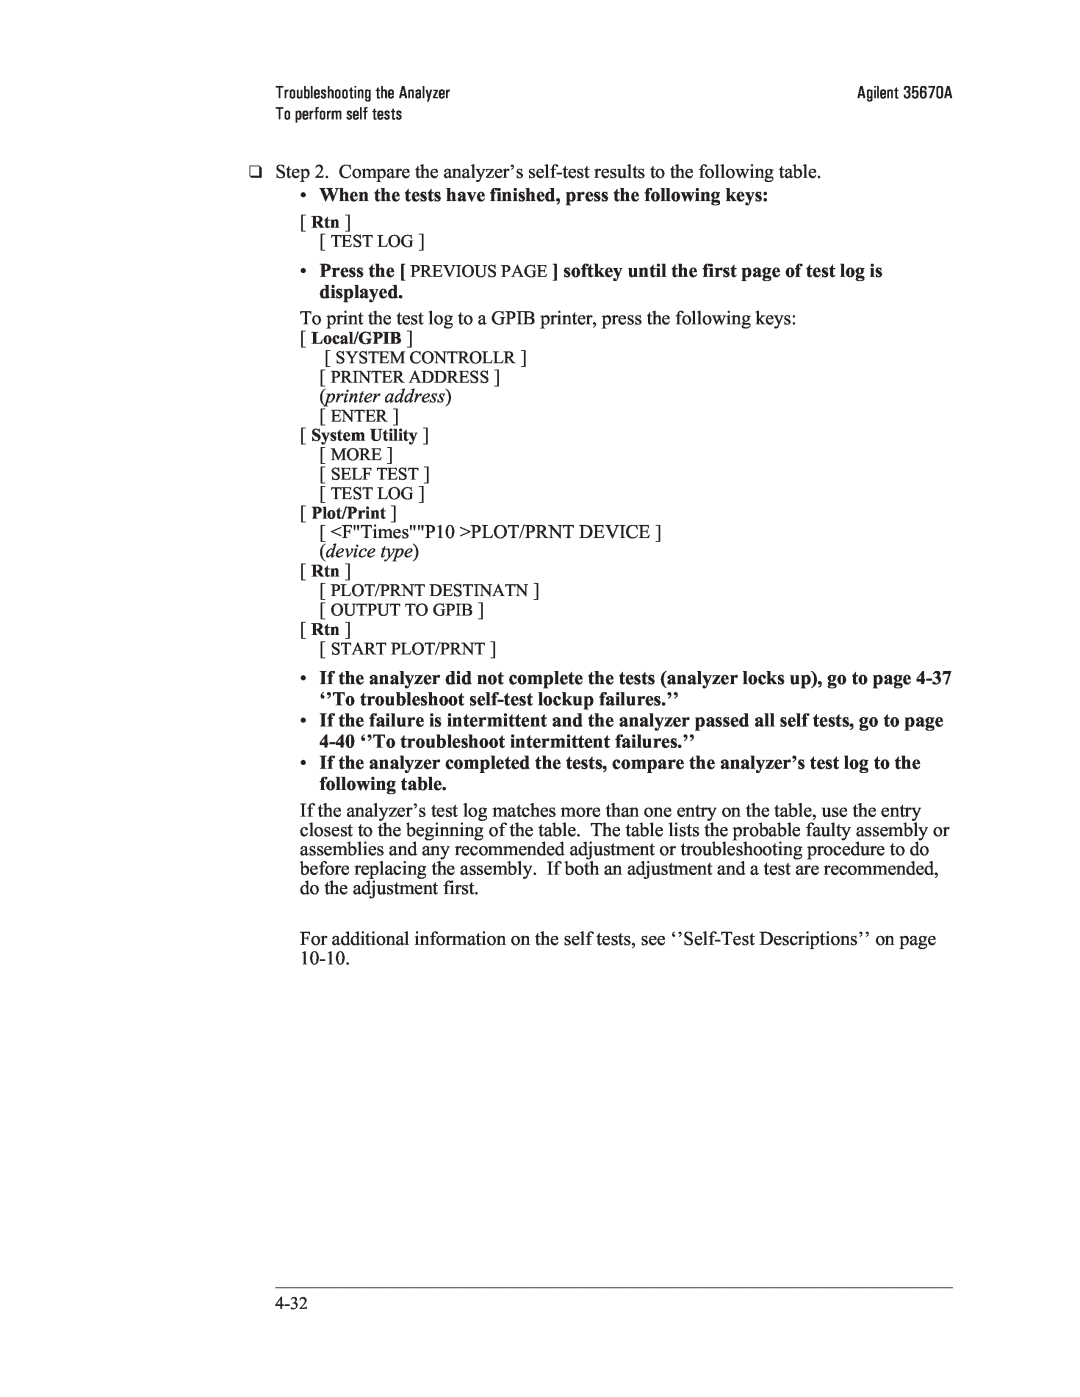 Agilent Technologies 35670-90066 manual displayed, ‘’To troubleshoot self-testlockup failures.’’, following table 